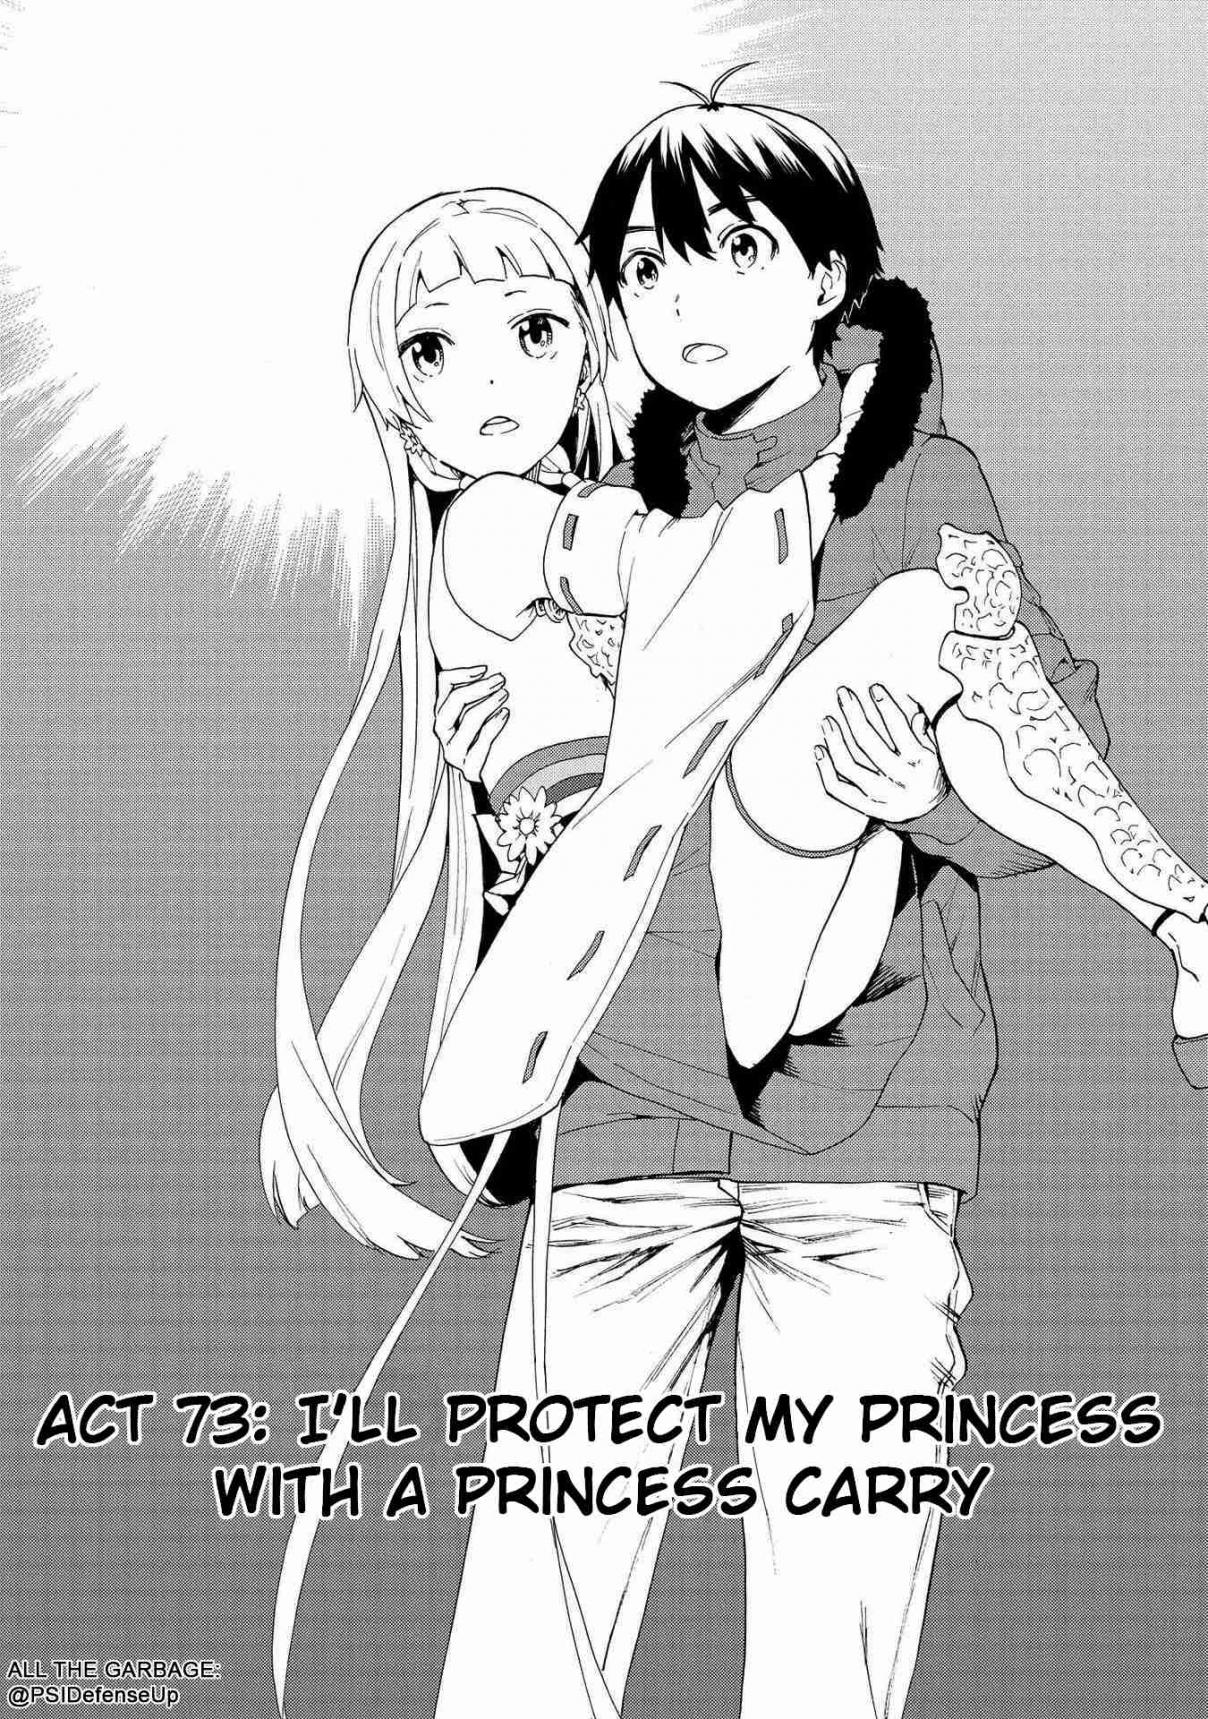 Kannagi Vol. 12 Ch. 73 I'll Protect My Princess with a Princess Carry